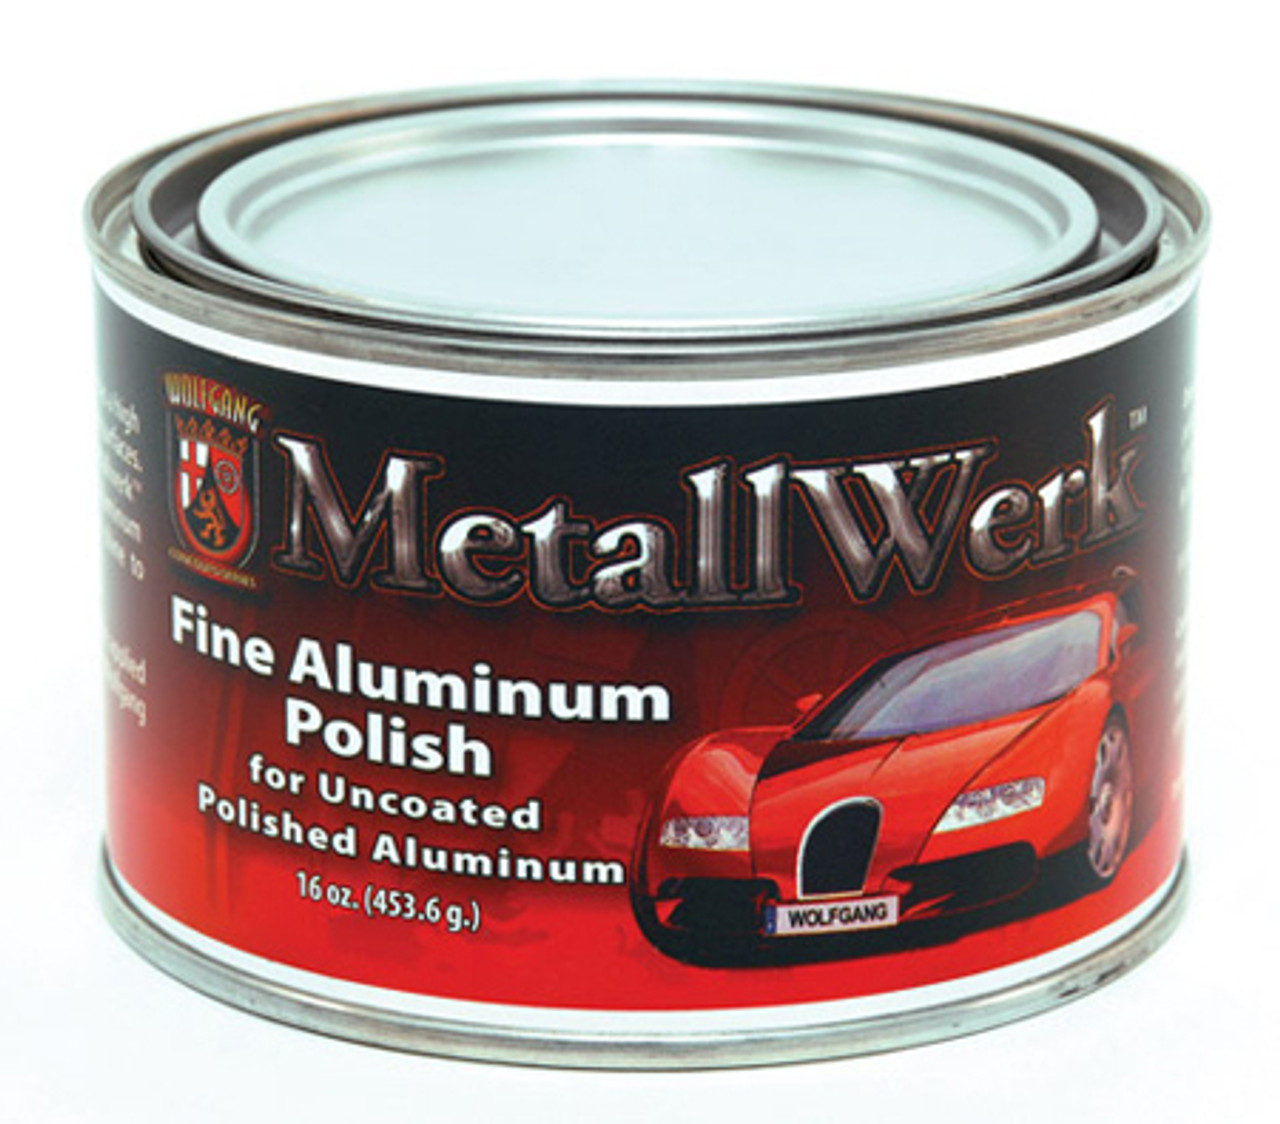 Wolfgang MetallWerk Fine Aluminum Polish